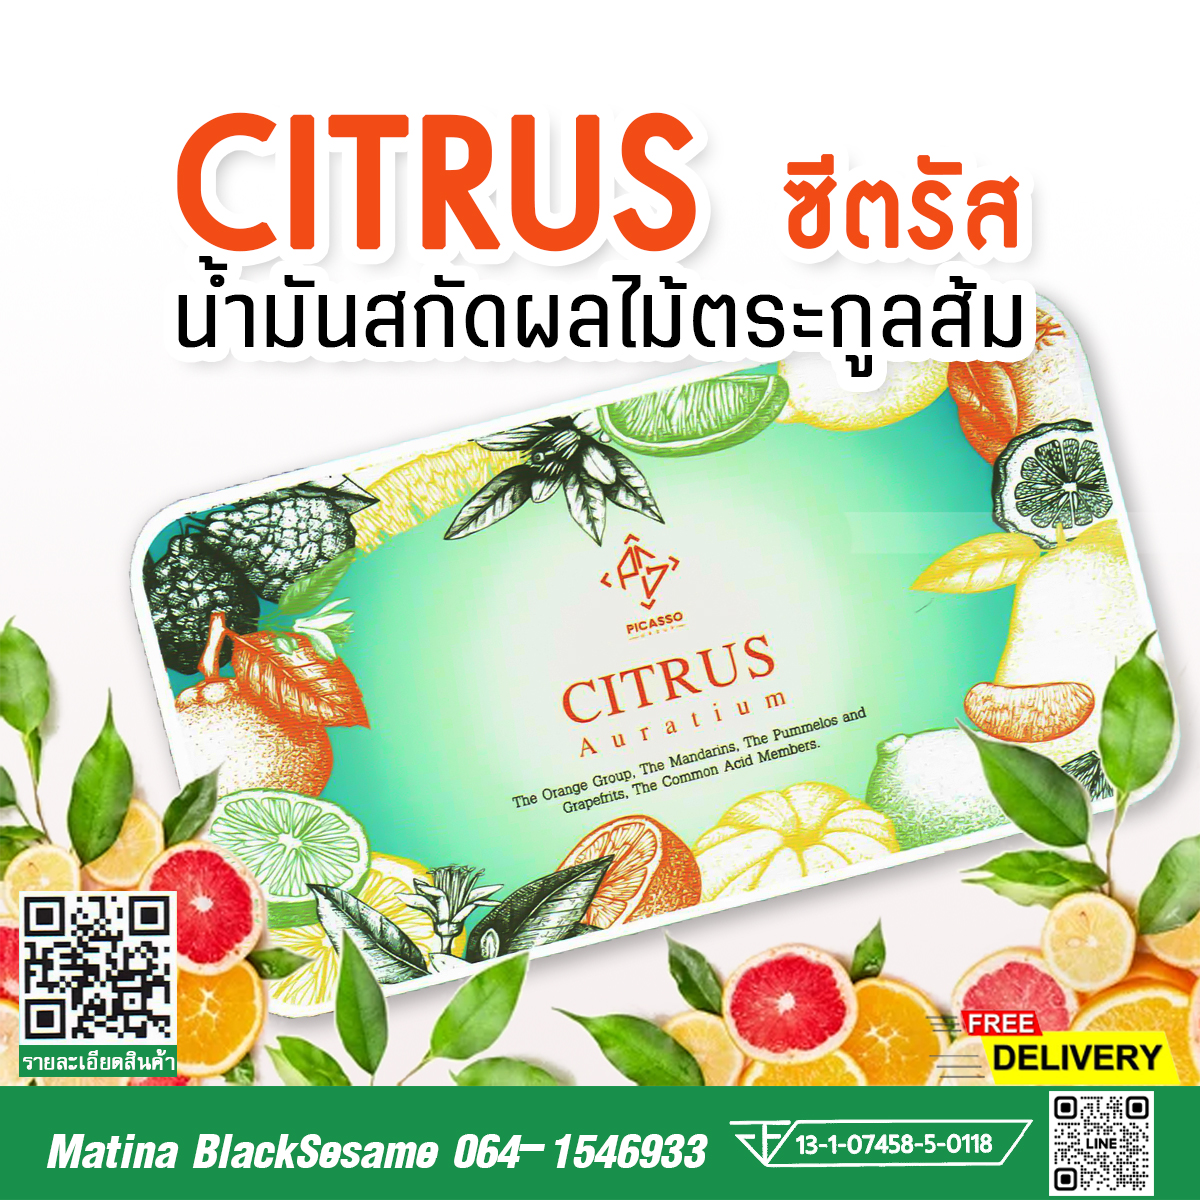 CITRUS น้ำมันที่สกัดจากผลไม้ตระกูลซิตรัสกว่า 100 ชนิด